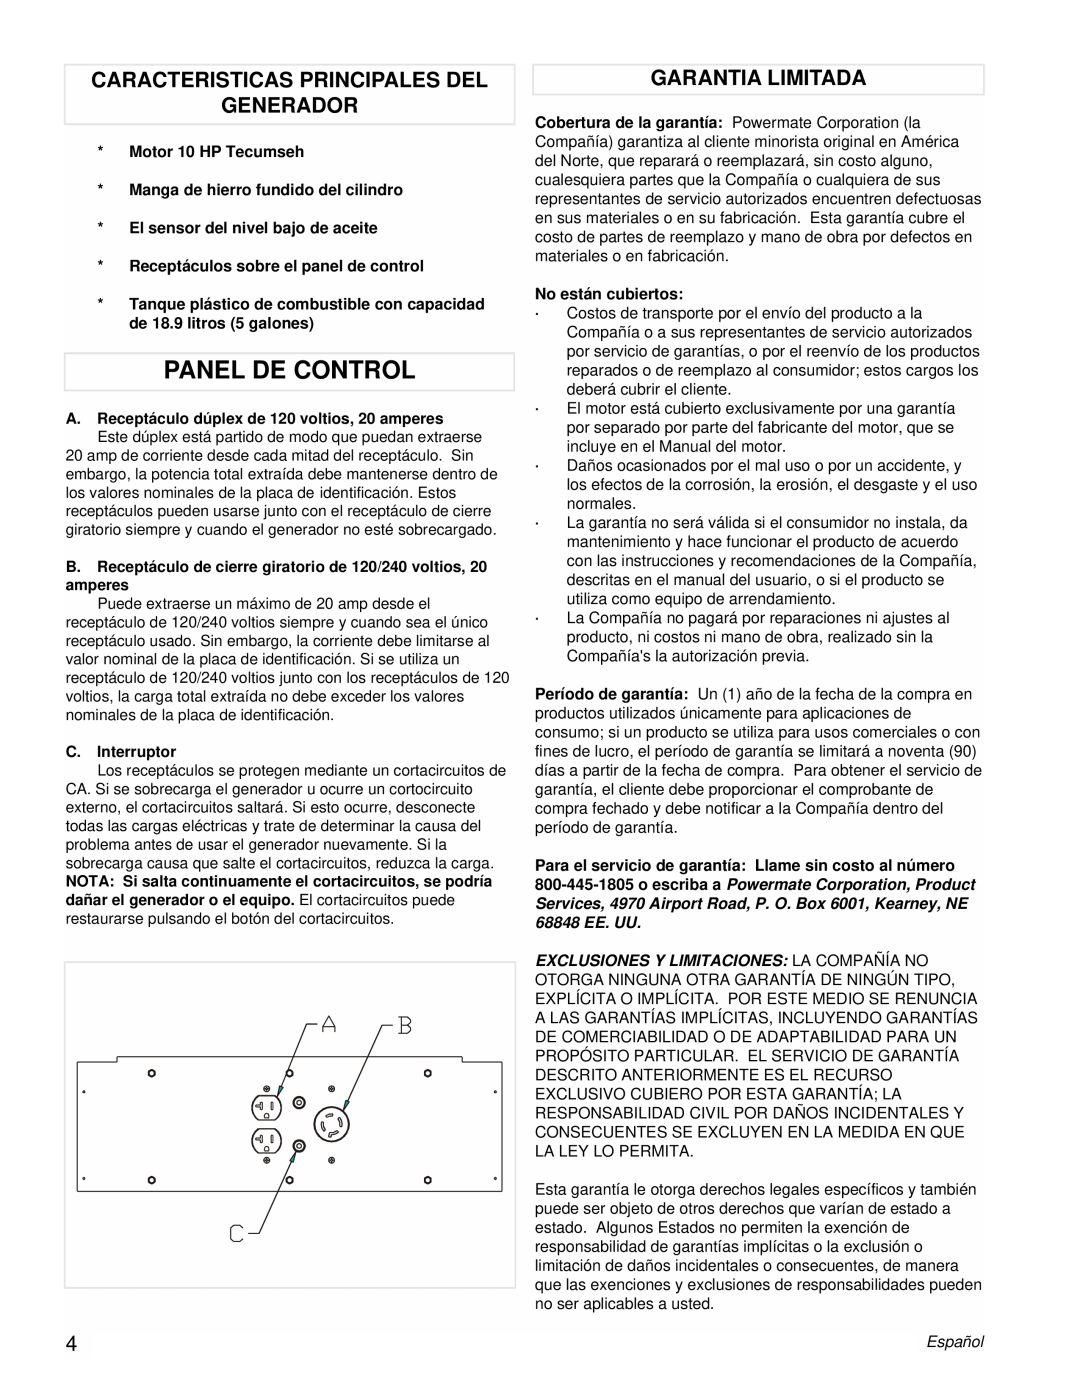 Coleman PMA525302.02 manual Panel De Control, Caracteristicas Principales Del Generador, Garantia Limitada 